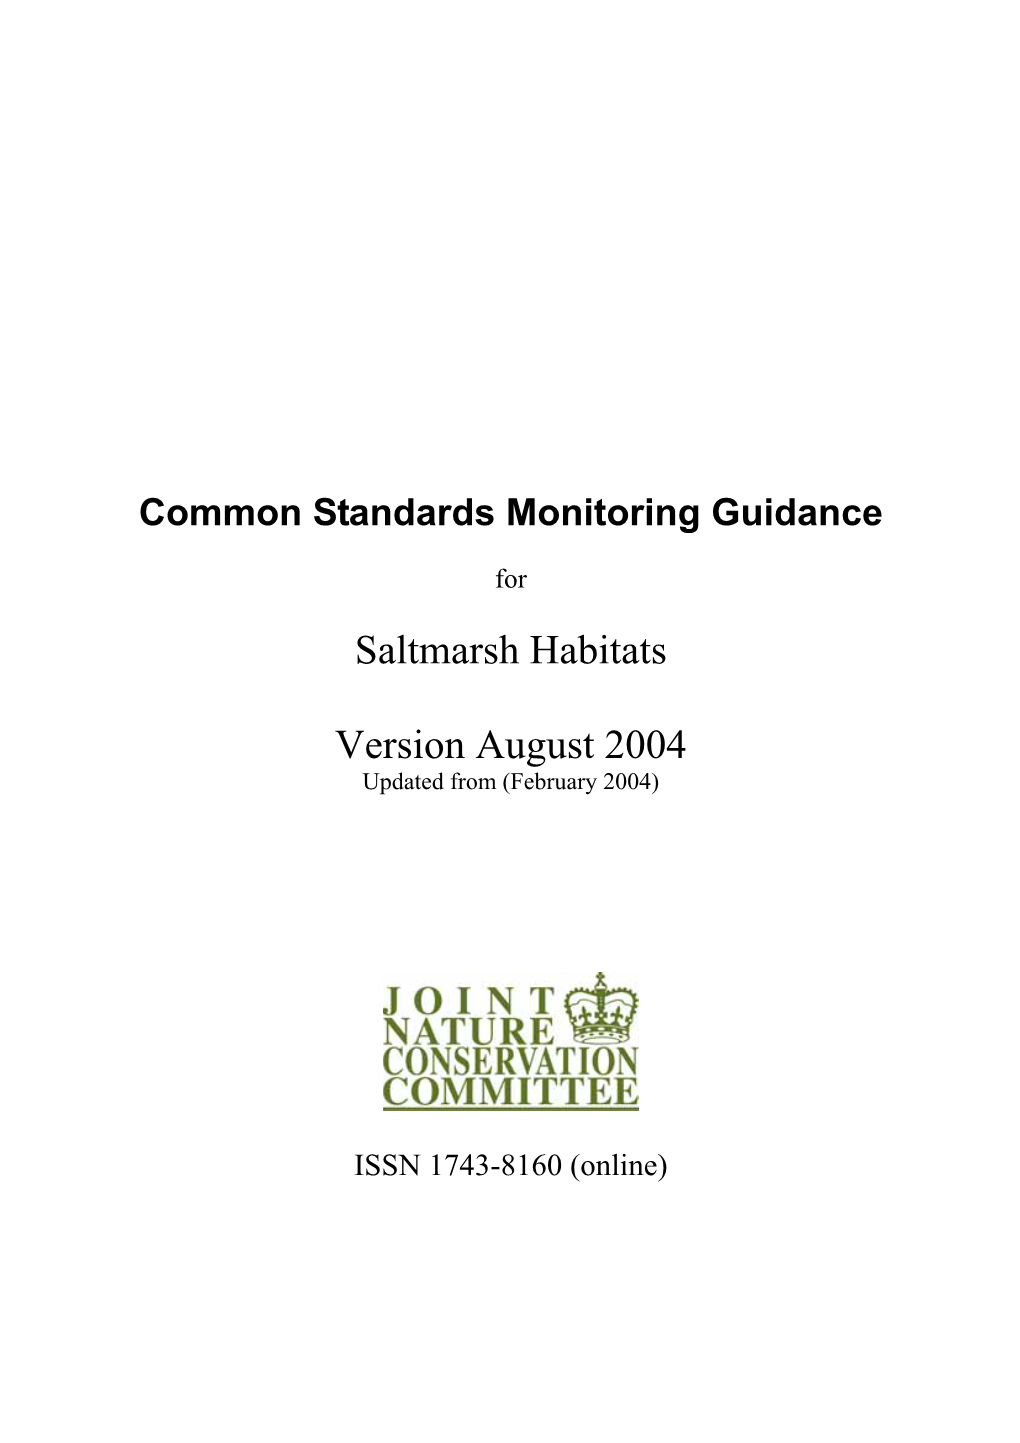 Common Standards Monitoring Guidance for Saltmarsh Habitats